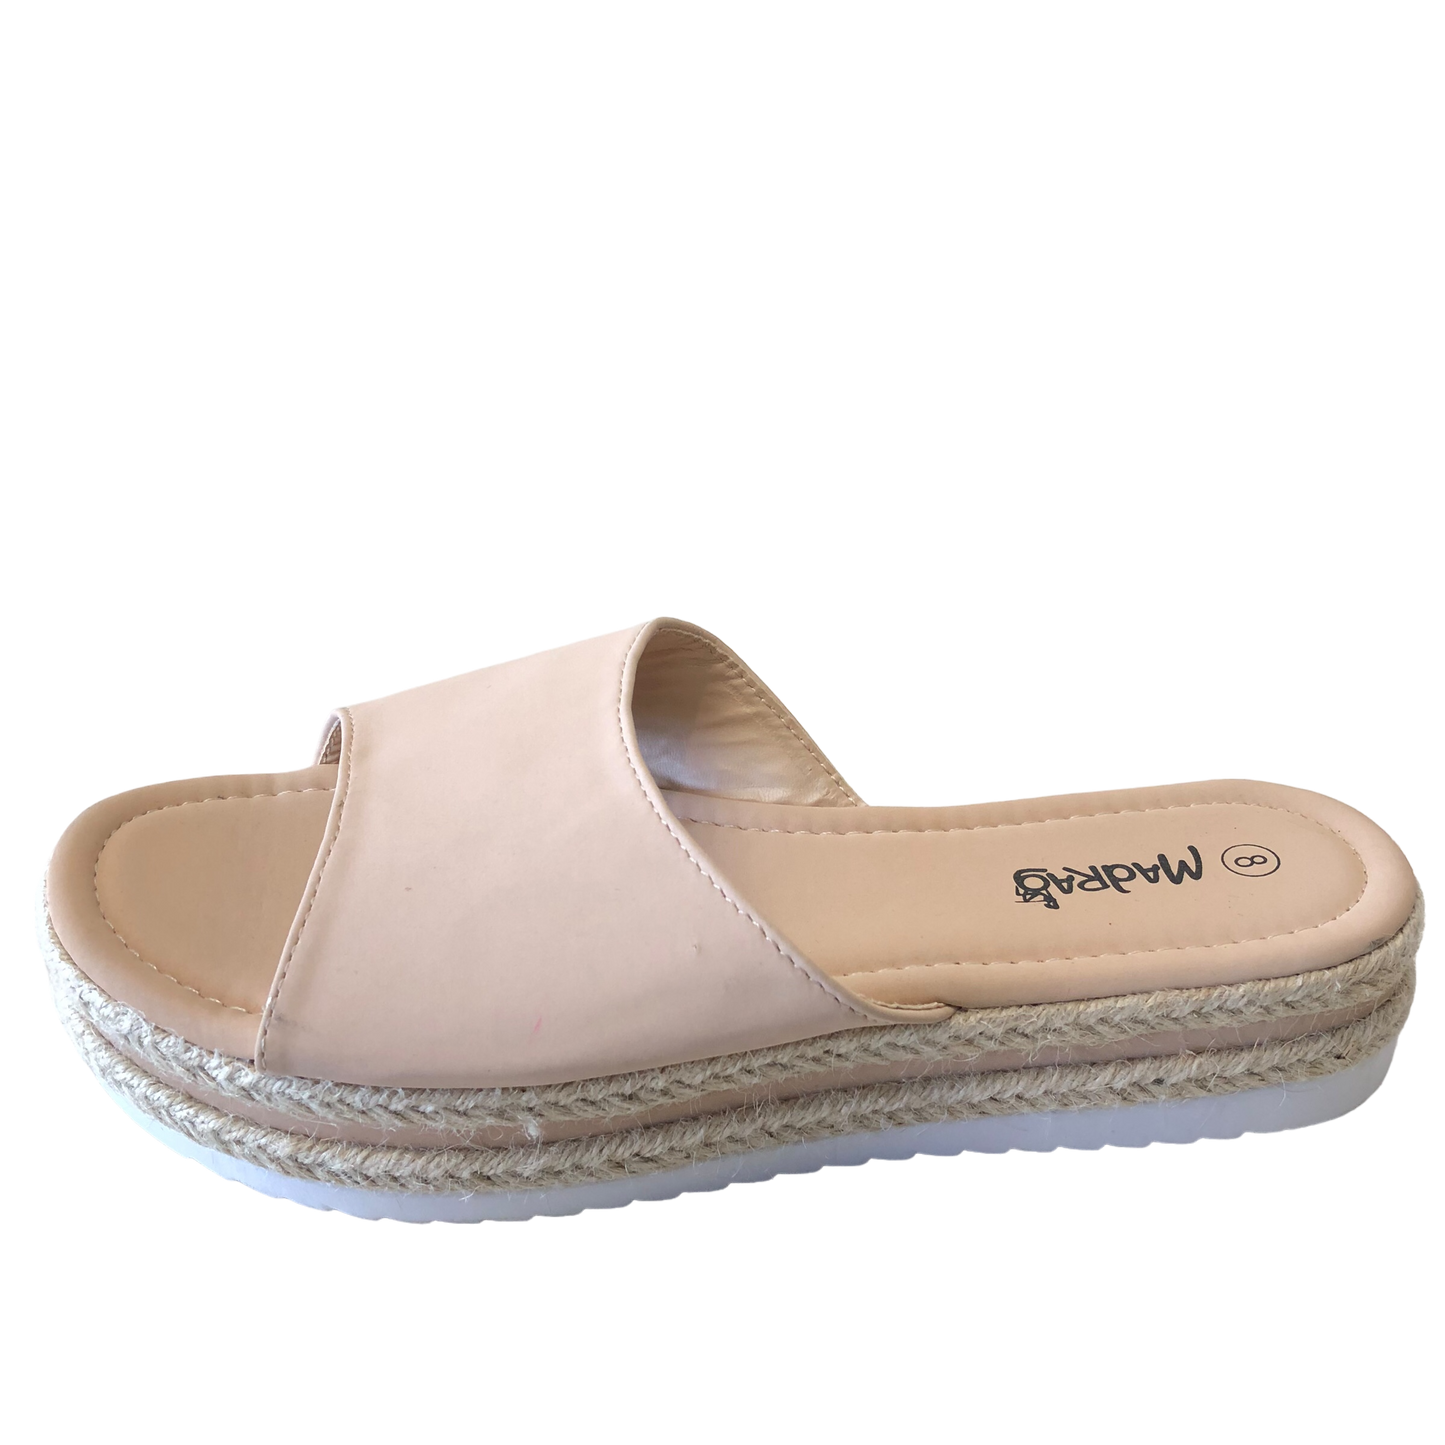 Beige Sandals Flats Cmc, Size 8